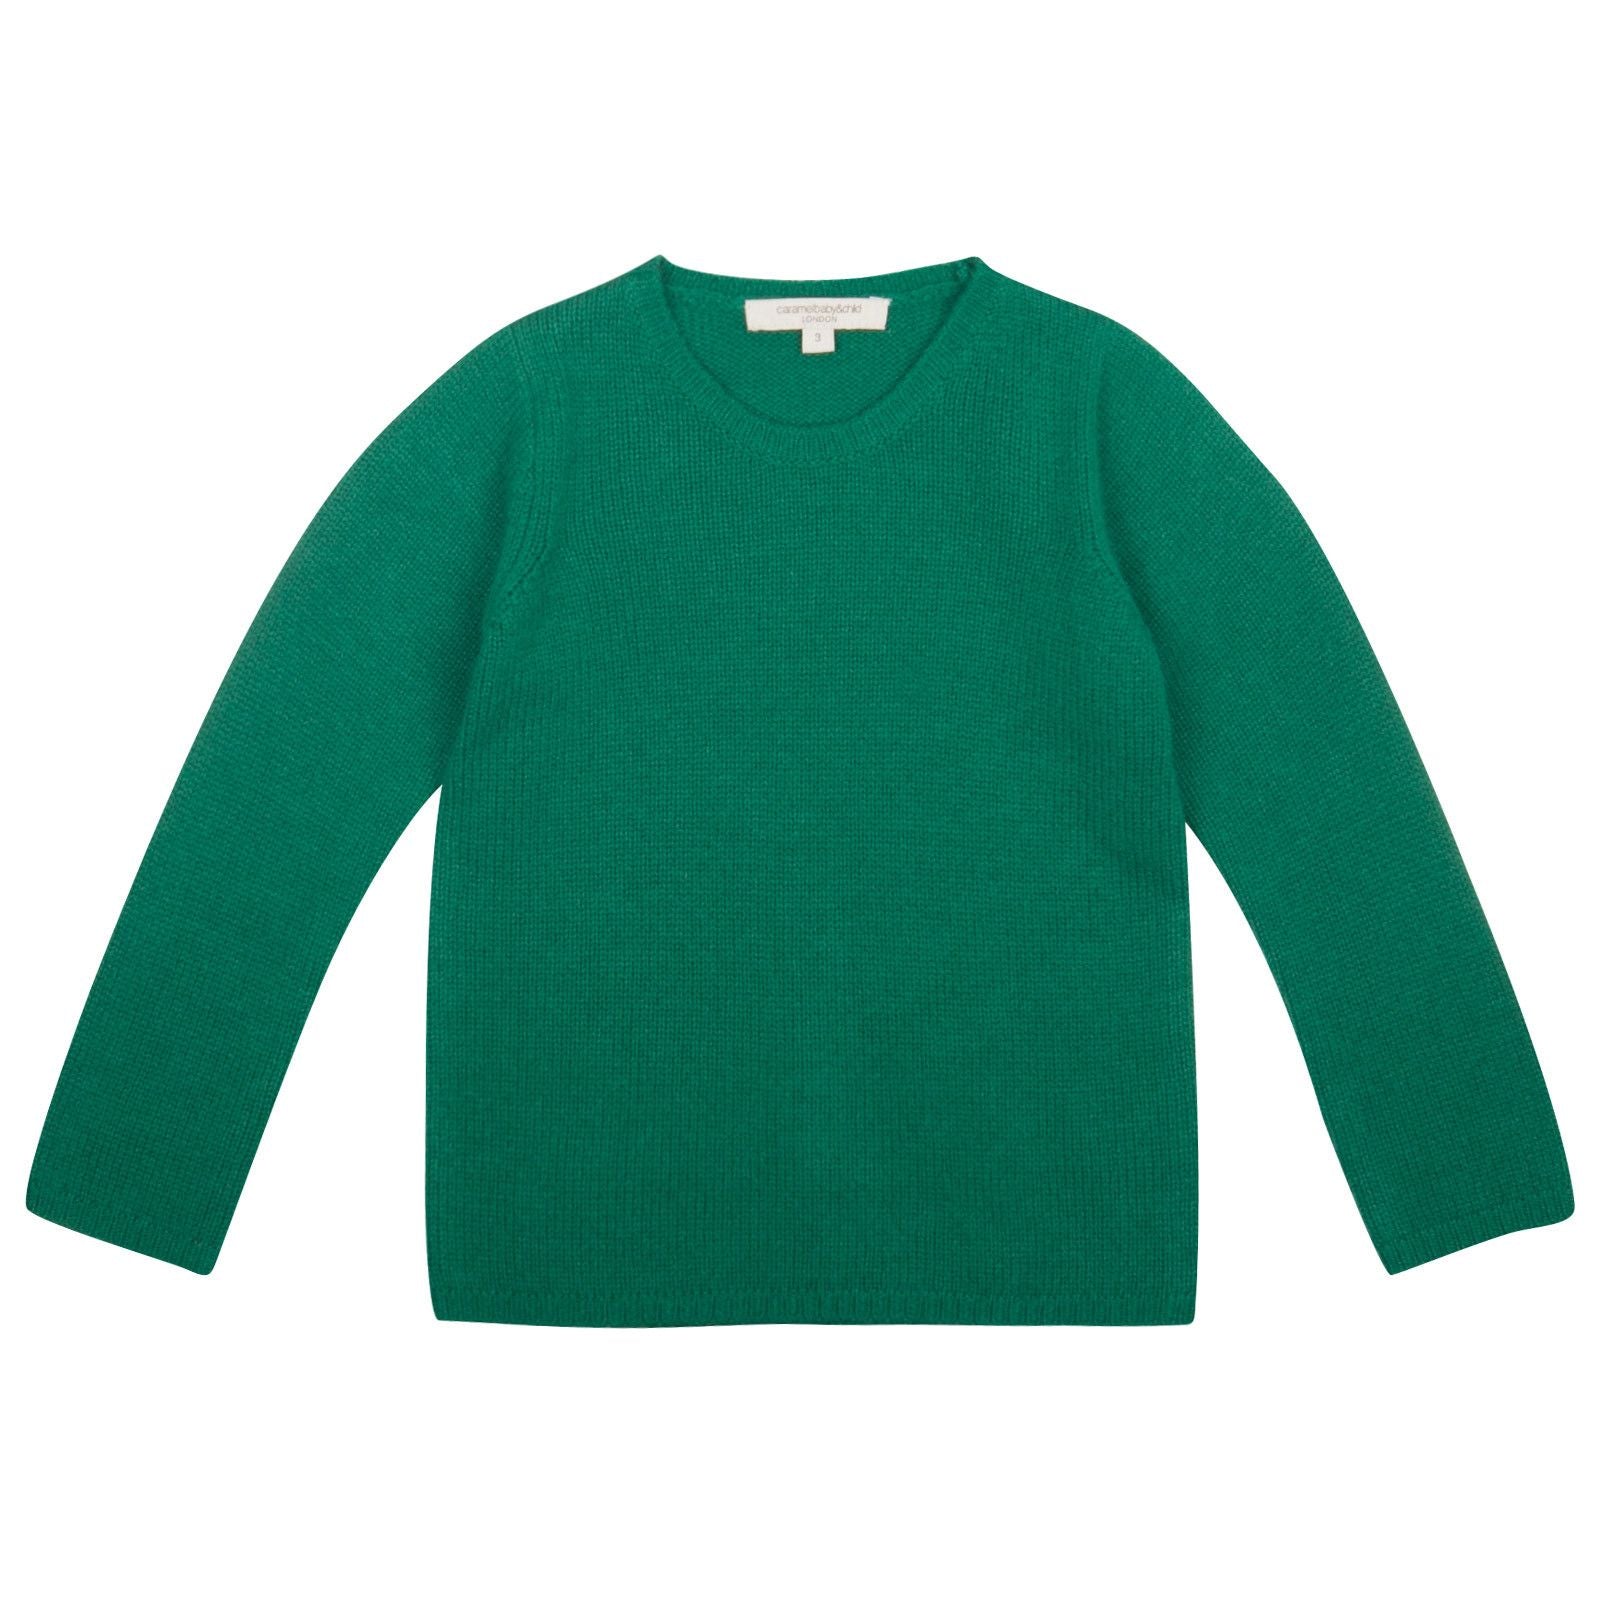 Boys Green Knitted Wool Greenwood Sweater - CÉMAROSE | Children's Fashion Store - 1